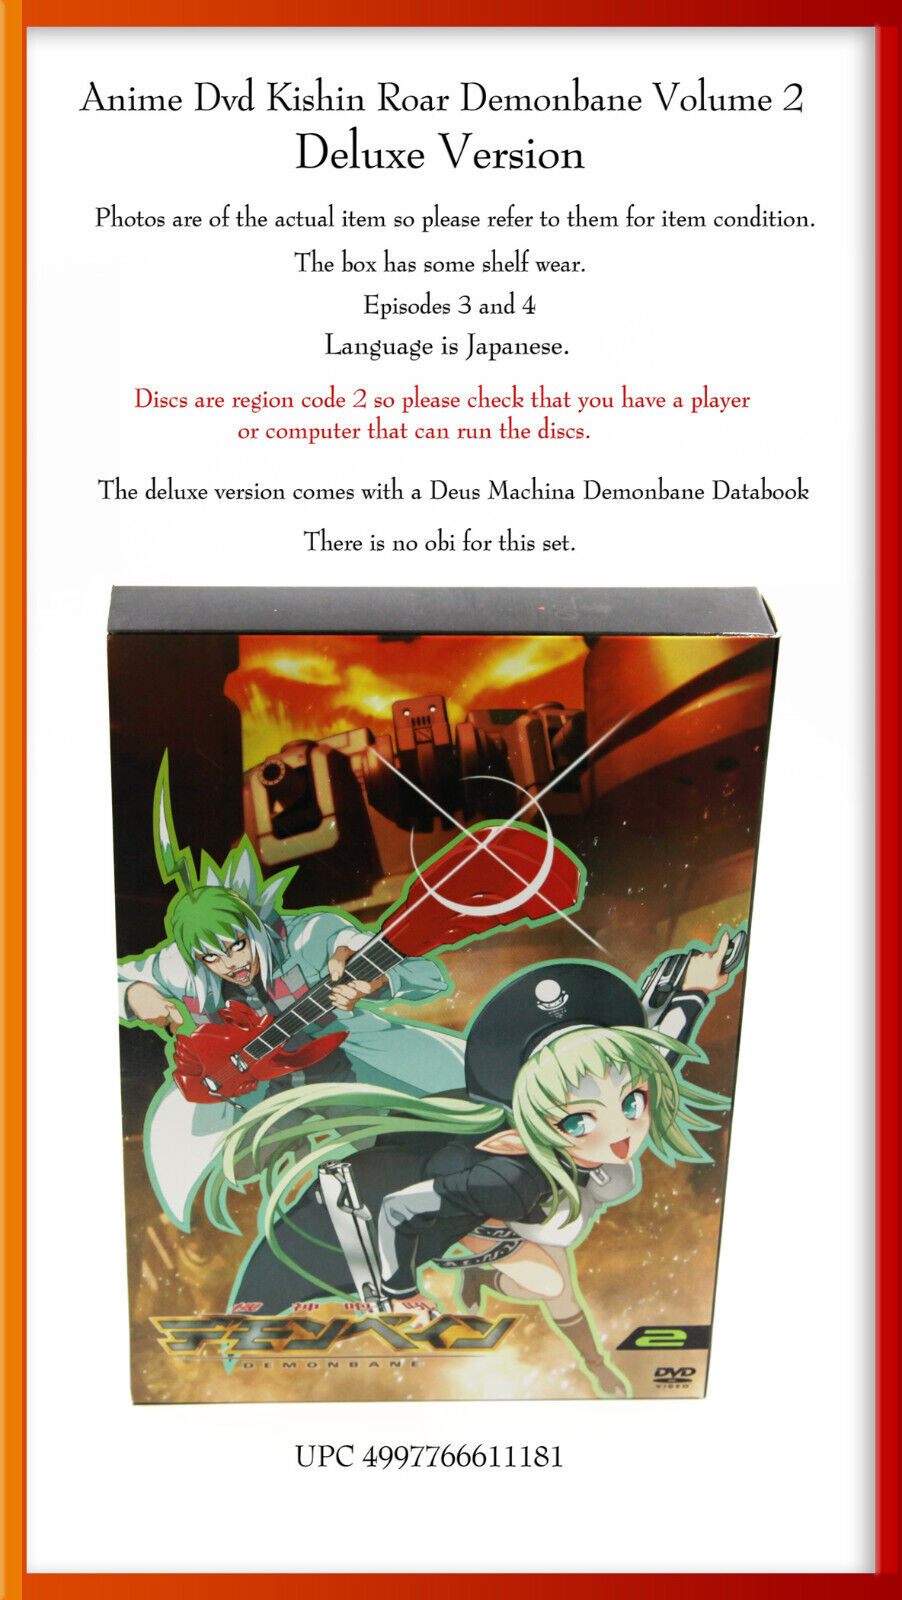 Anime DVD - Kishin Houkou Demonbane Deluxe Edition Volume 2